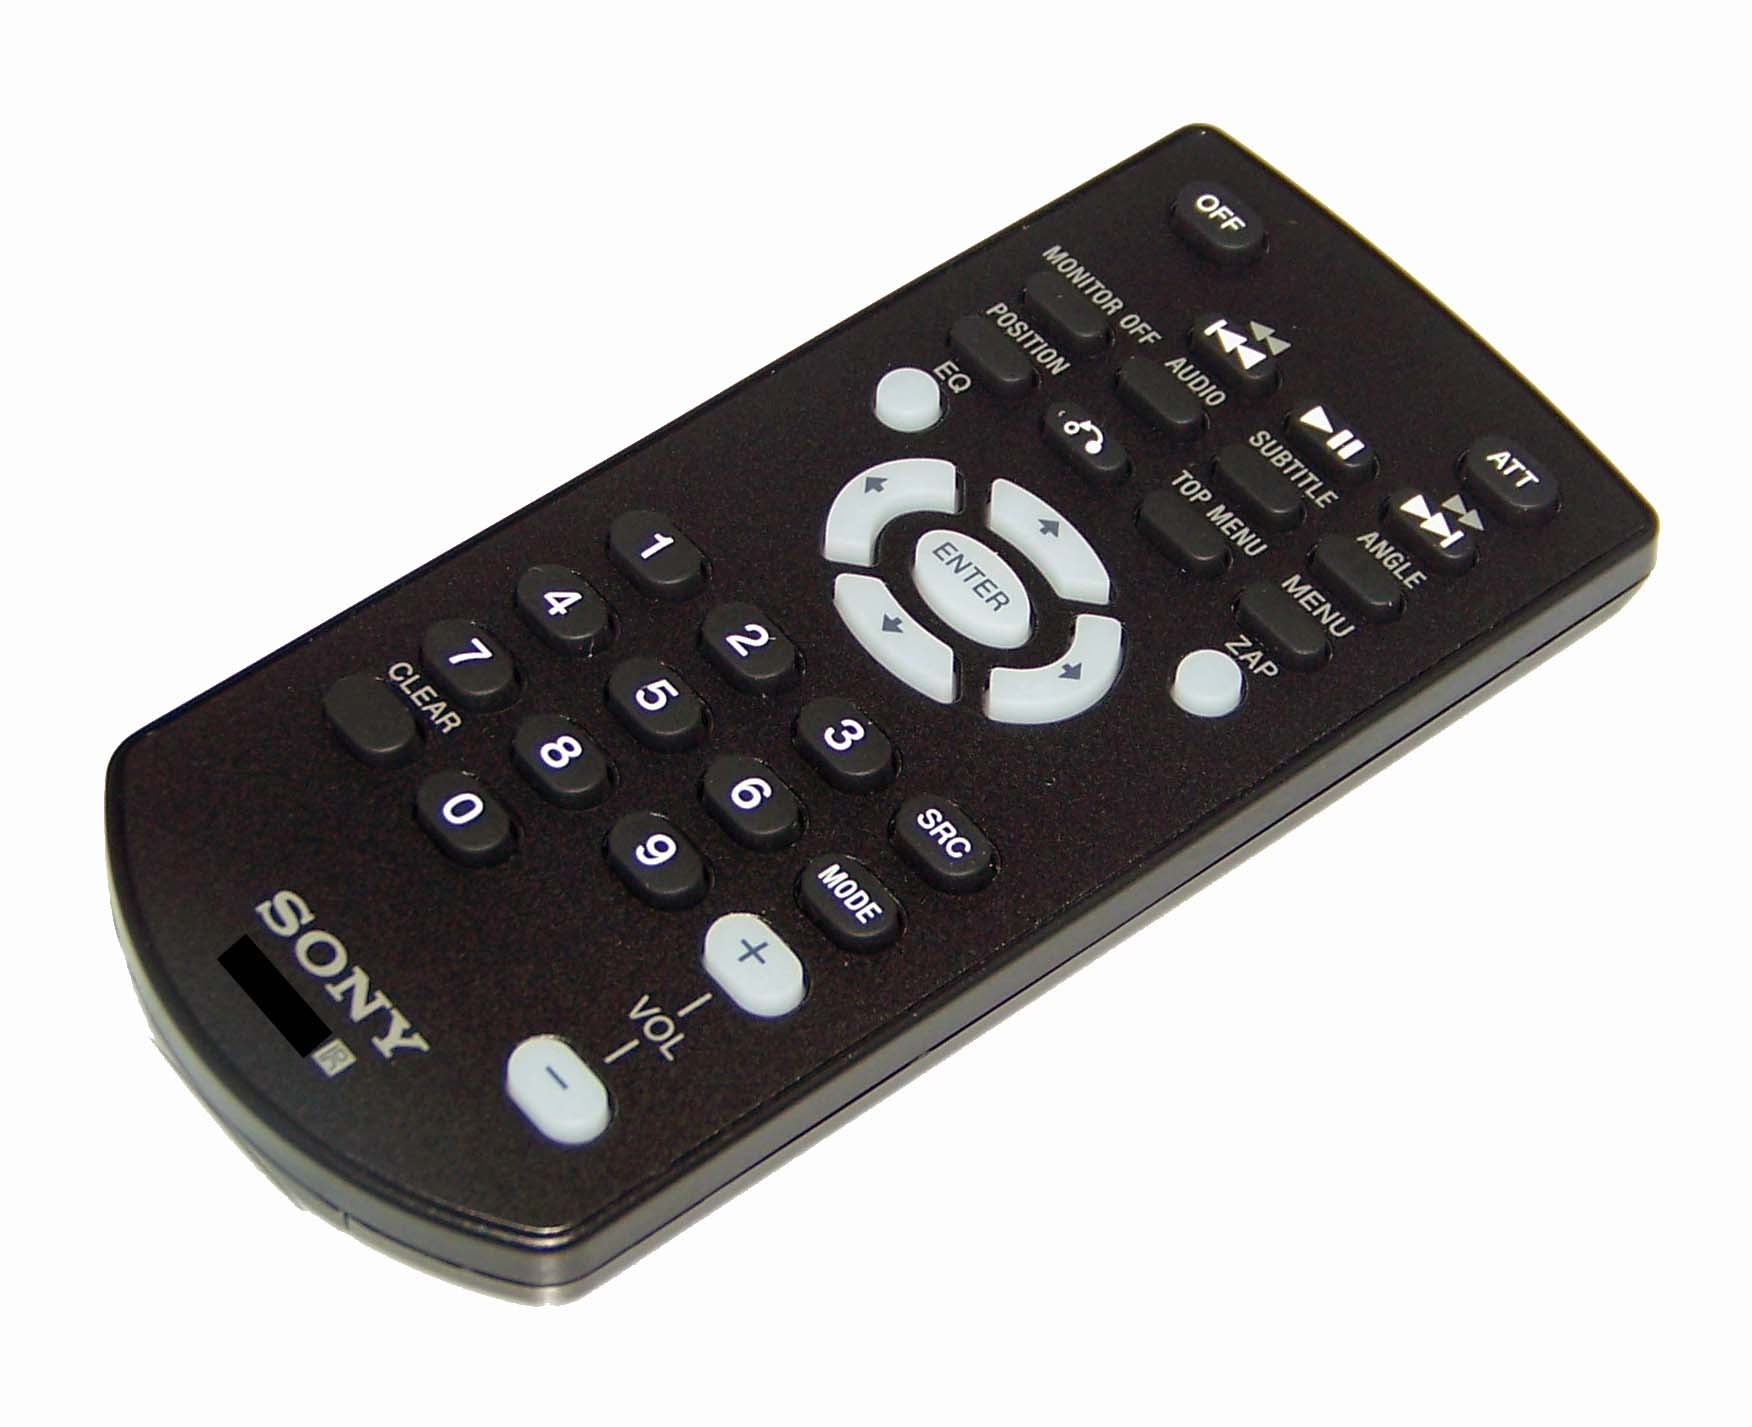 NEW OEM Sony Remote Control Shipped With XAV60, XAV-60, XAV622, XAV-622